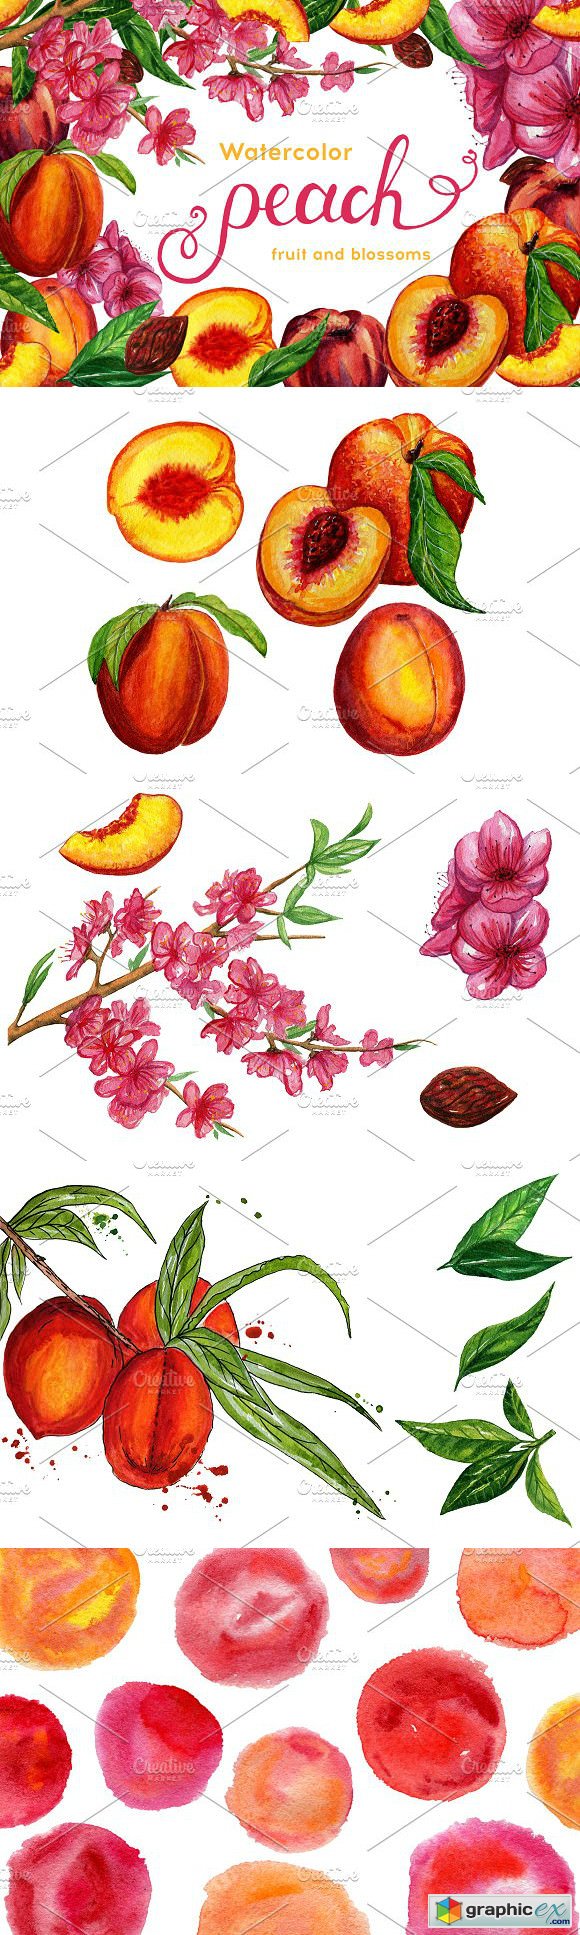 Watercolor peaches set